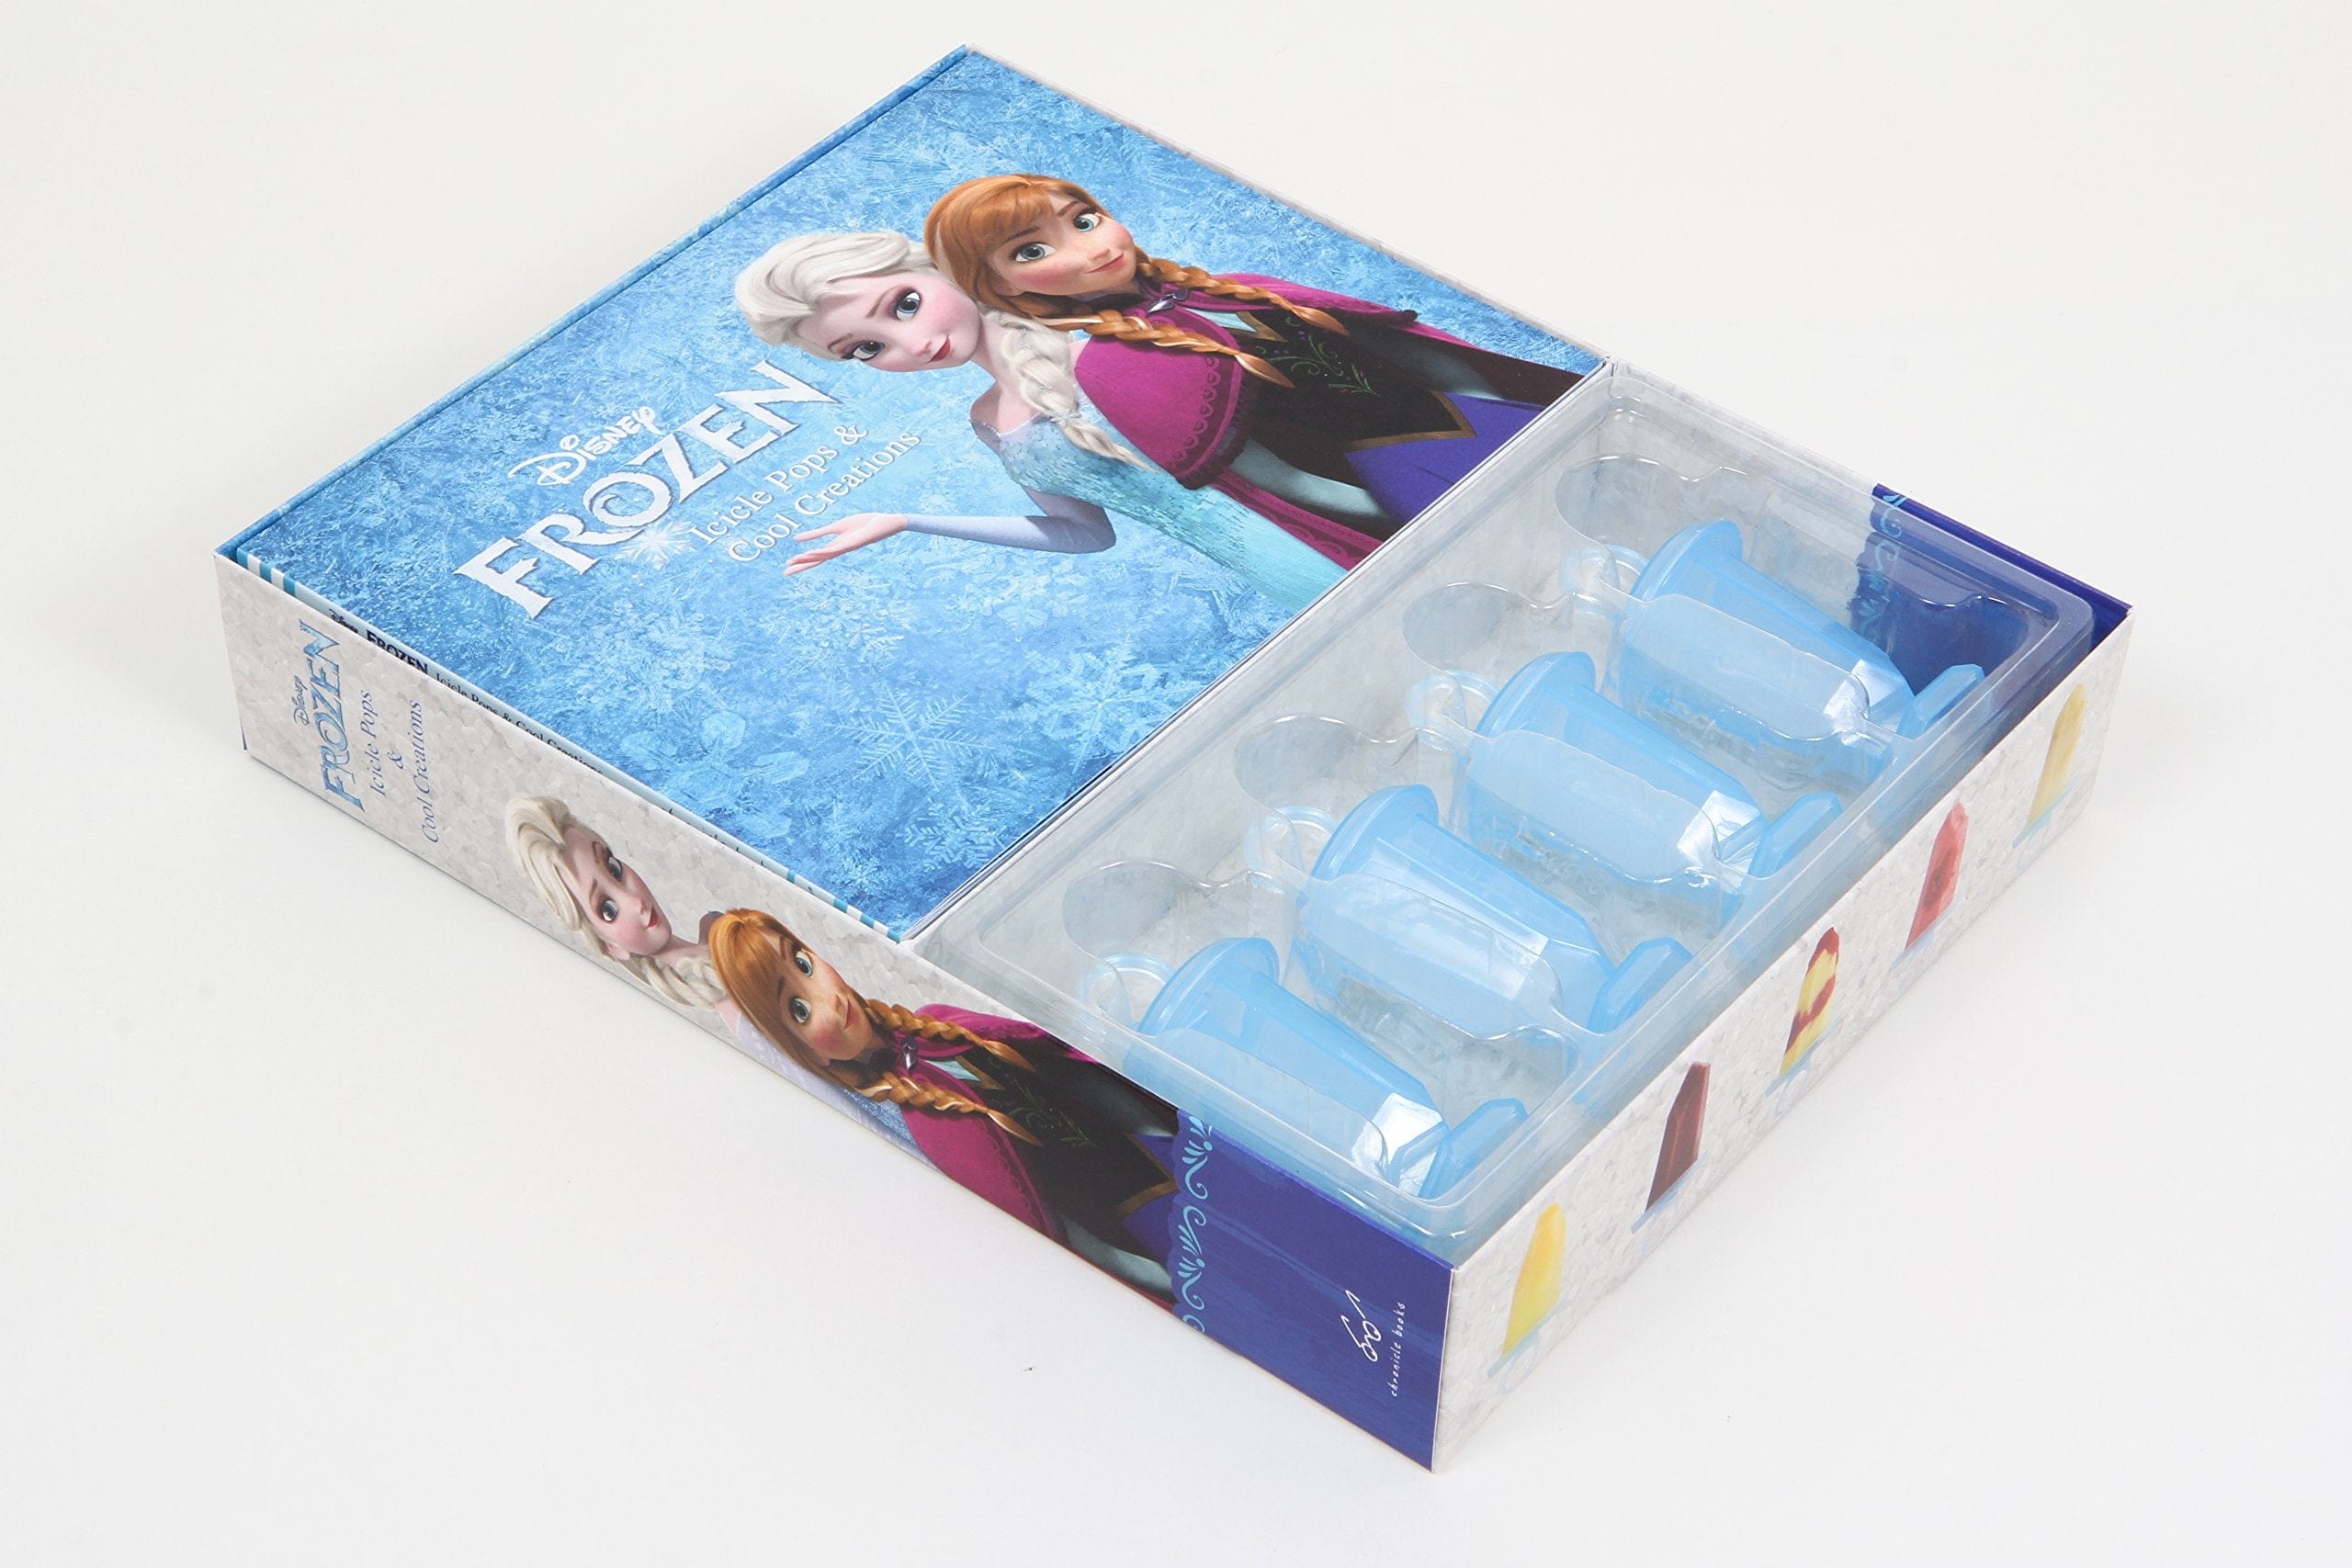 Disney's Frozen (3 Activity Book & Coloring Book Set)